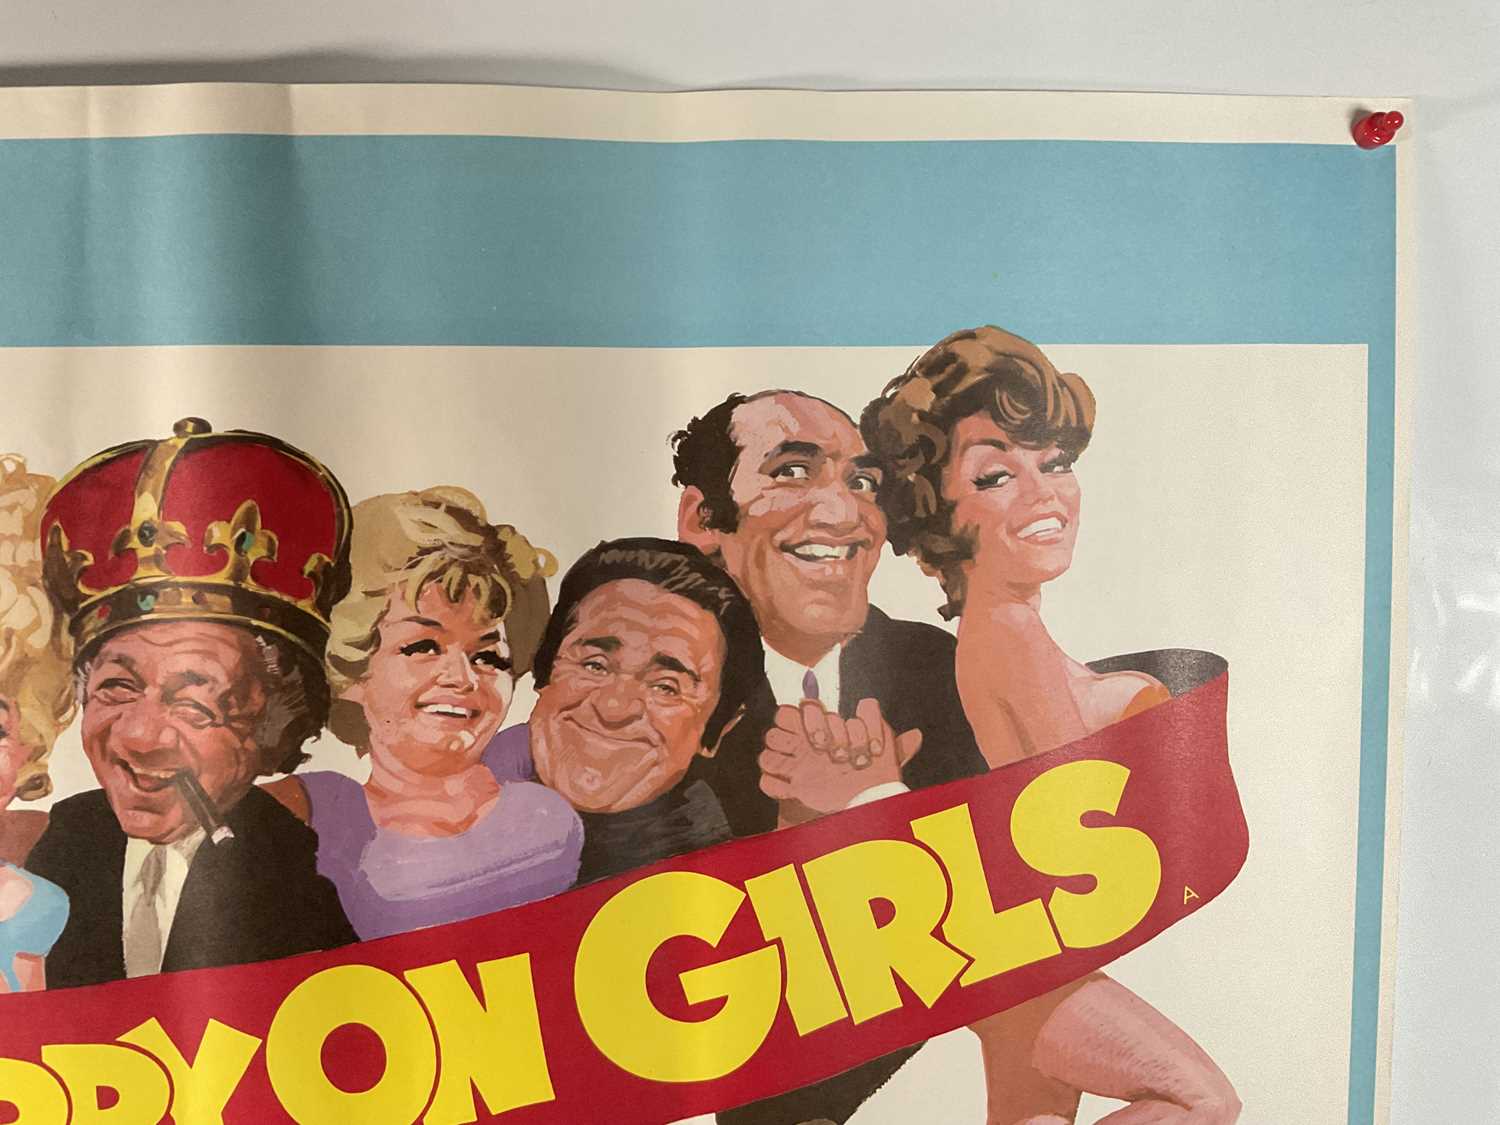 CARRY ON GIRLS (1973) UK Quad film poster, artwork by Arnaldo Putzu, rolled. - Image 3 of 6